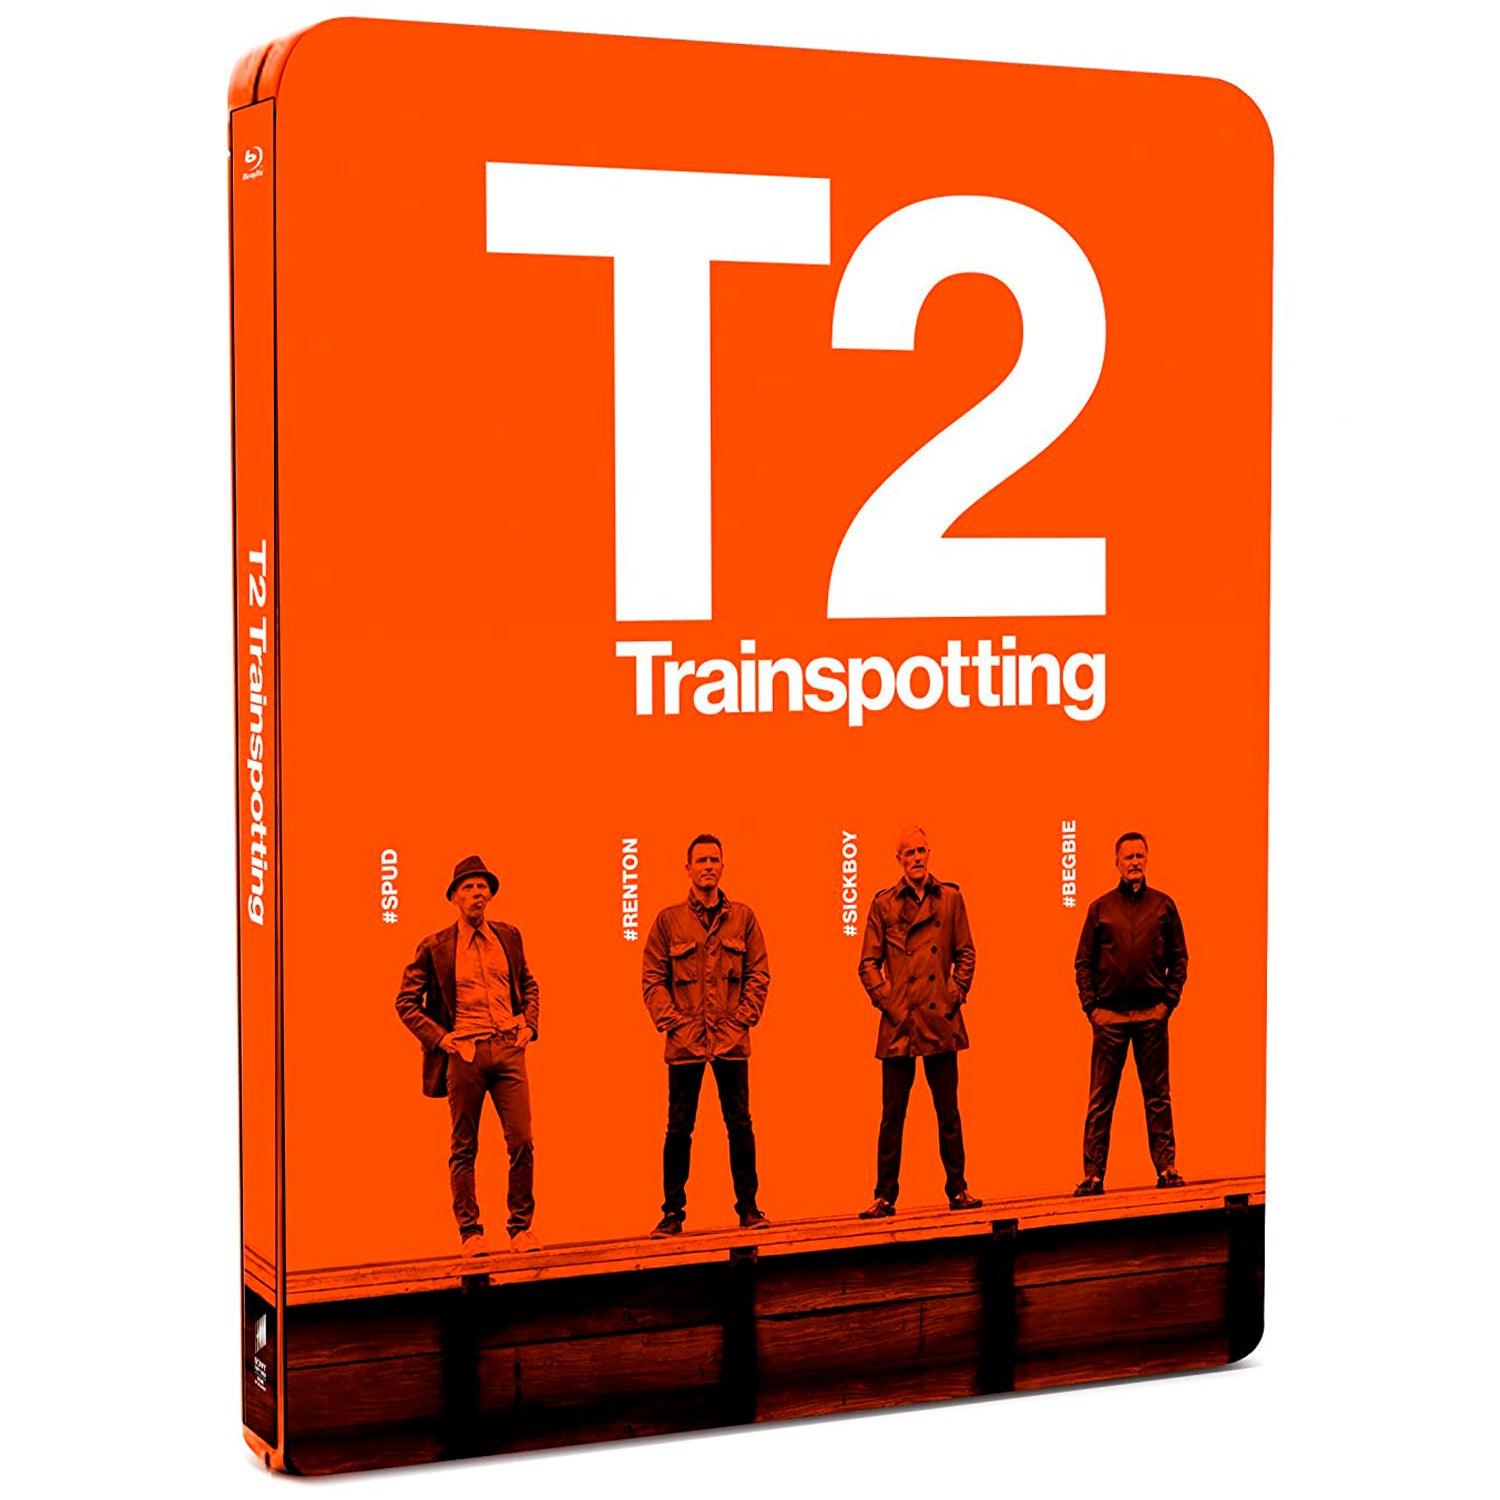 Т2 Трейнспоттинг (На игле 2) Steelbook (Blu-ray)